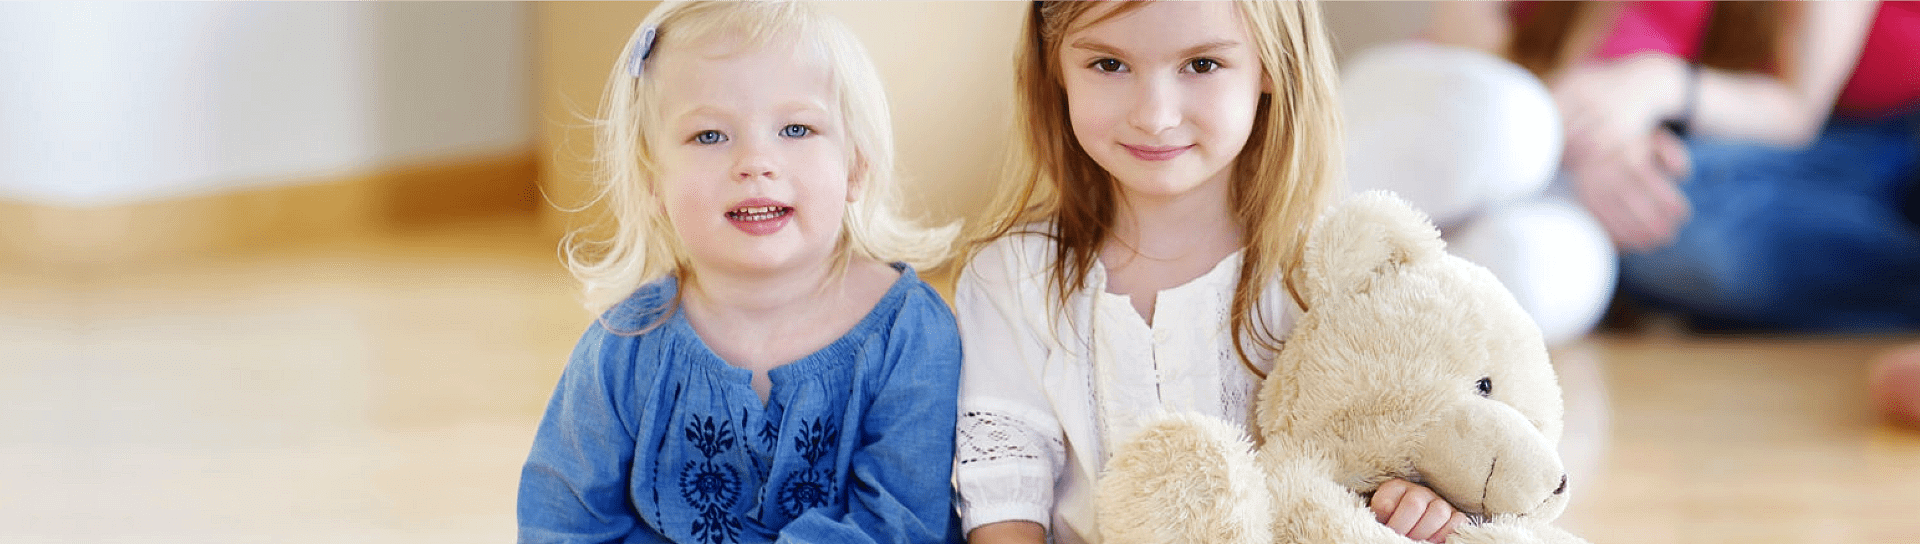 little girls playing teddy bear